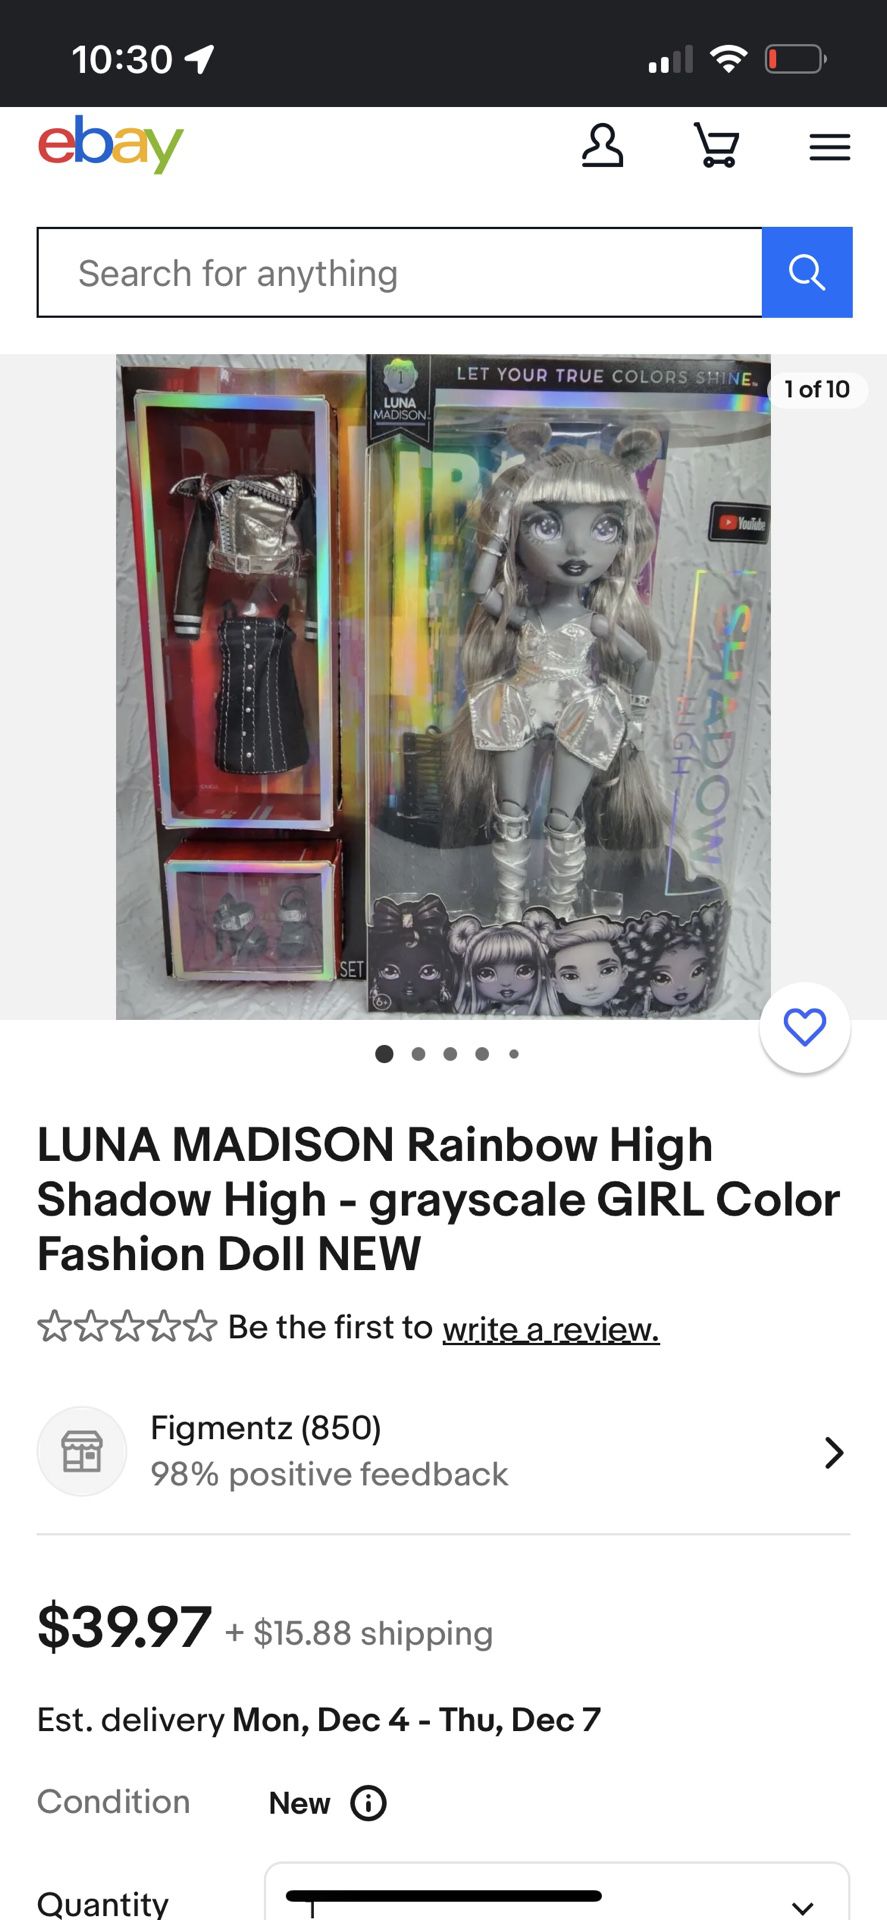 LUNA MADISON Rainbow High Shadow High - grayscale GIRL Color Fashion Doll NEW